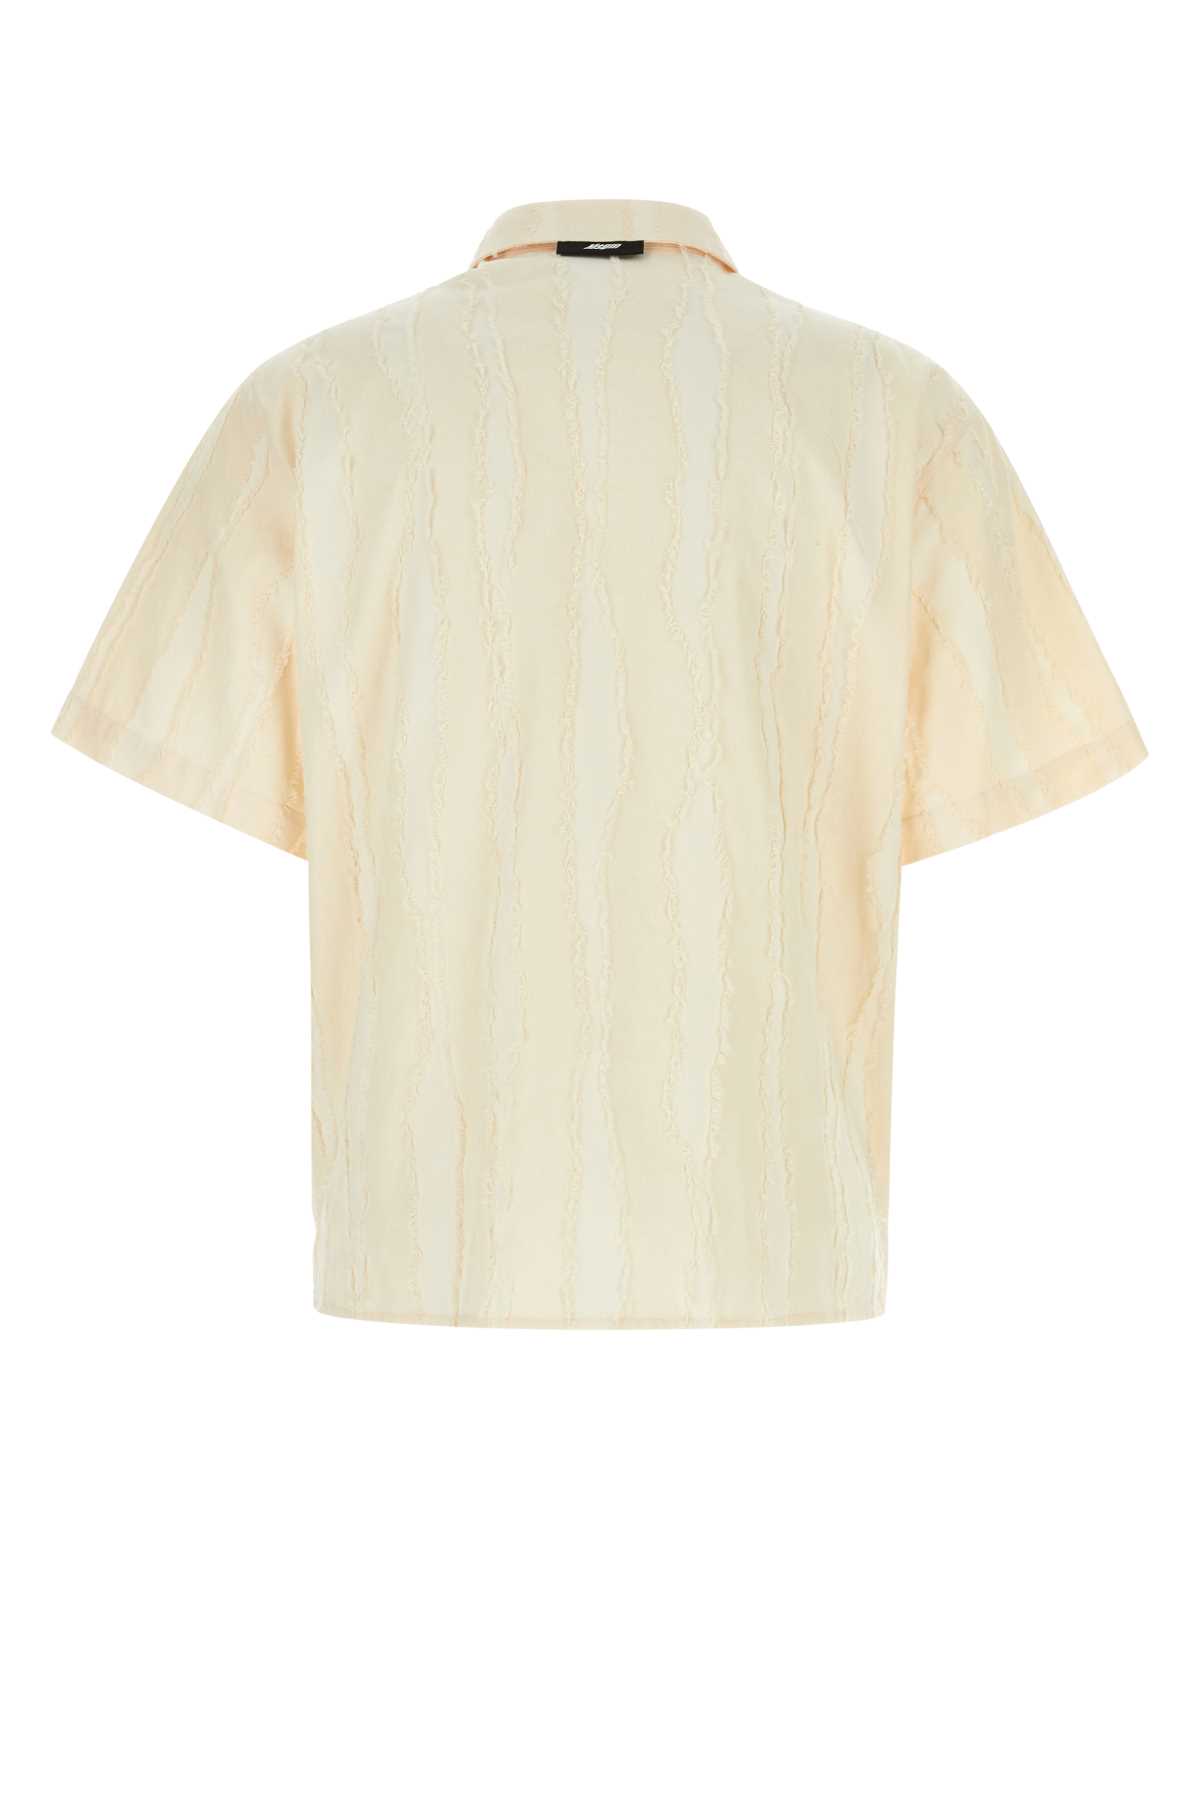 Msgm Cream Cotton Shirt In 04